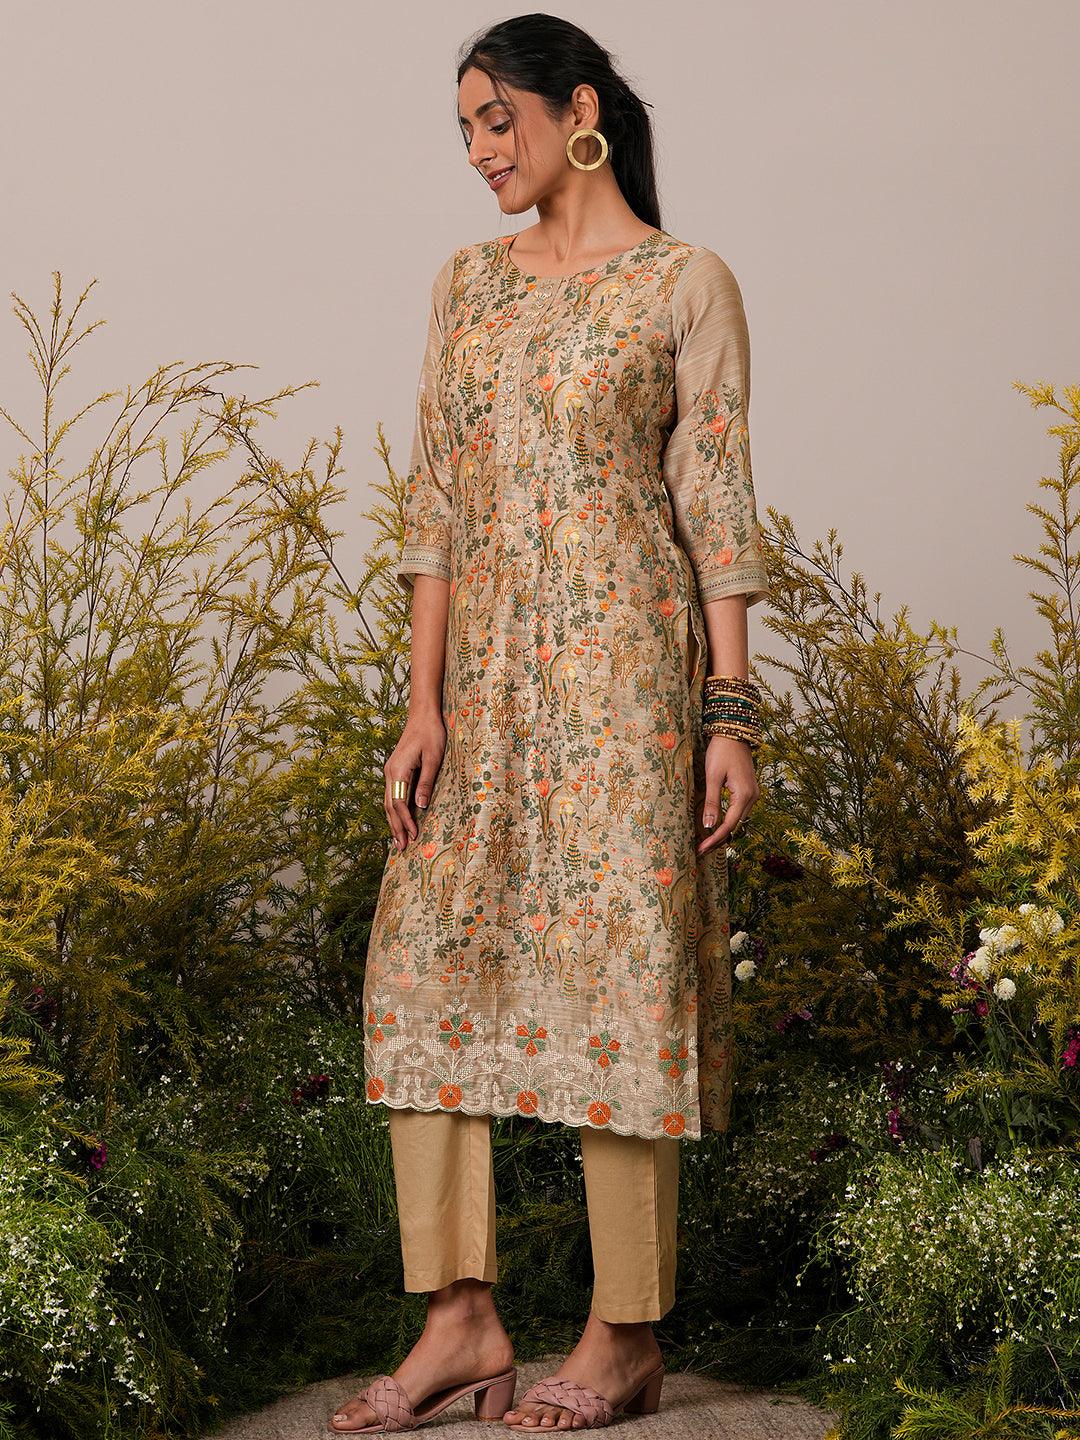 Tan Printed Chanderi Silk Straight Suit With Dupatta - Libas